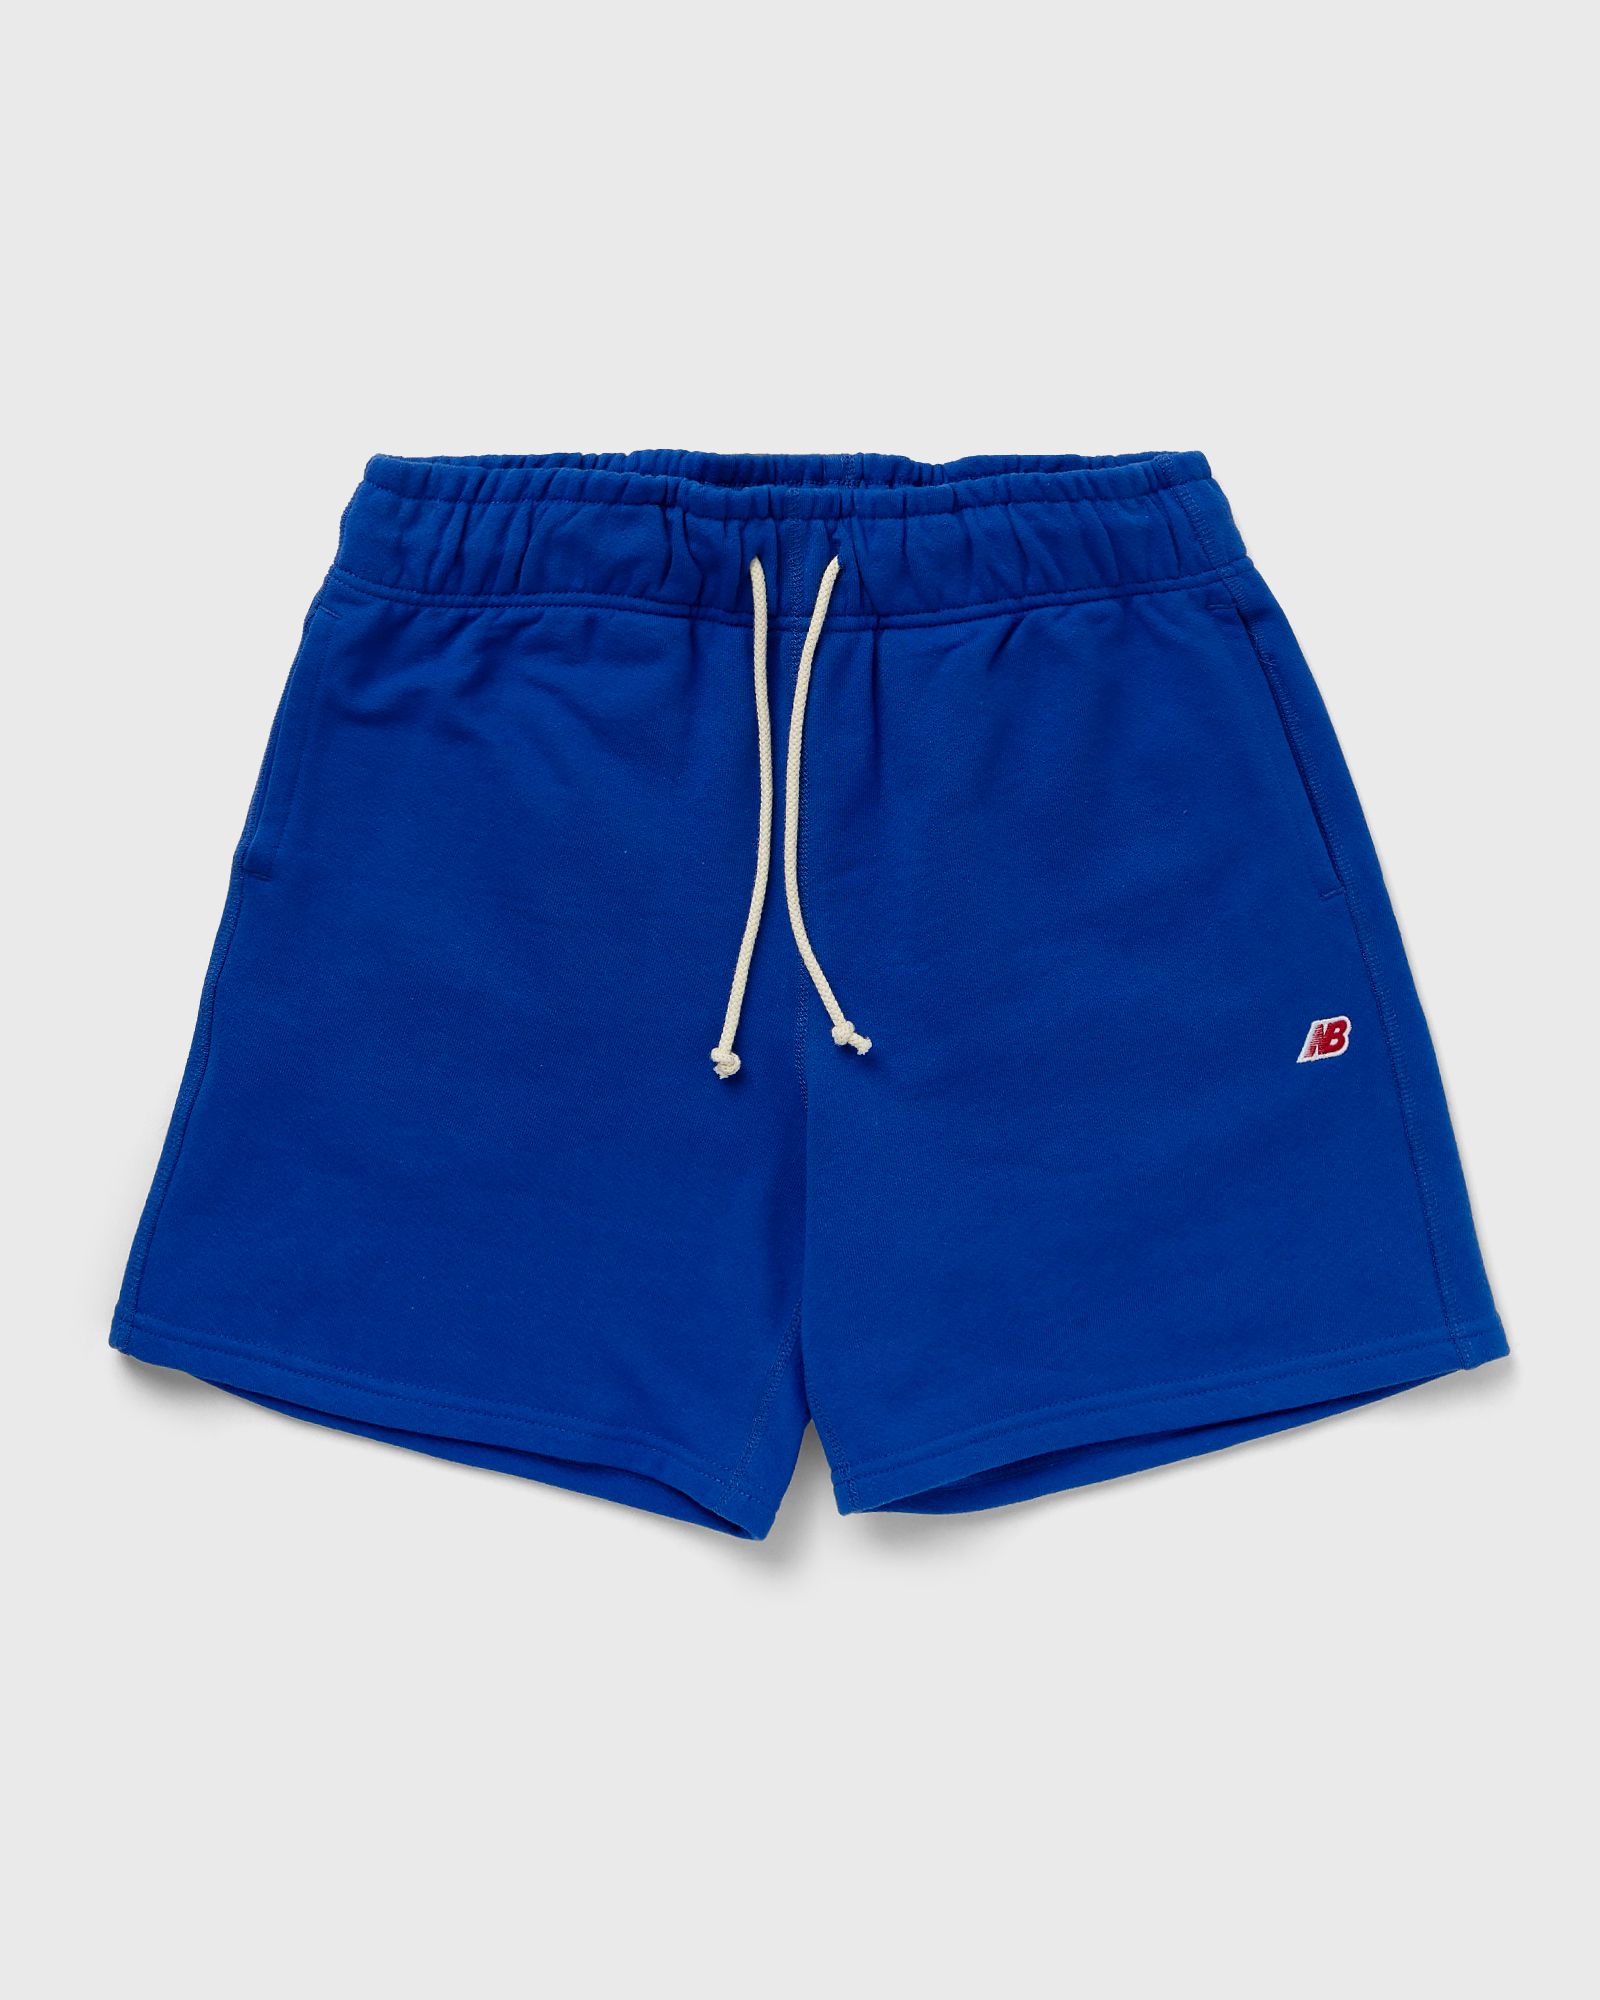 New Balance - made in usa core short men sport & team shorts blue in größe:s